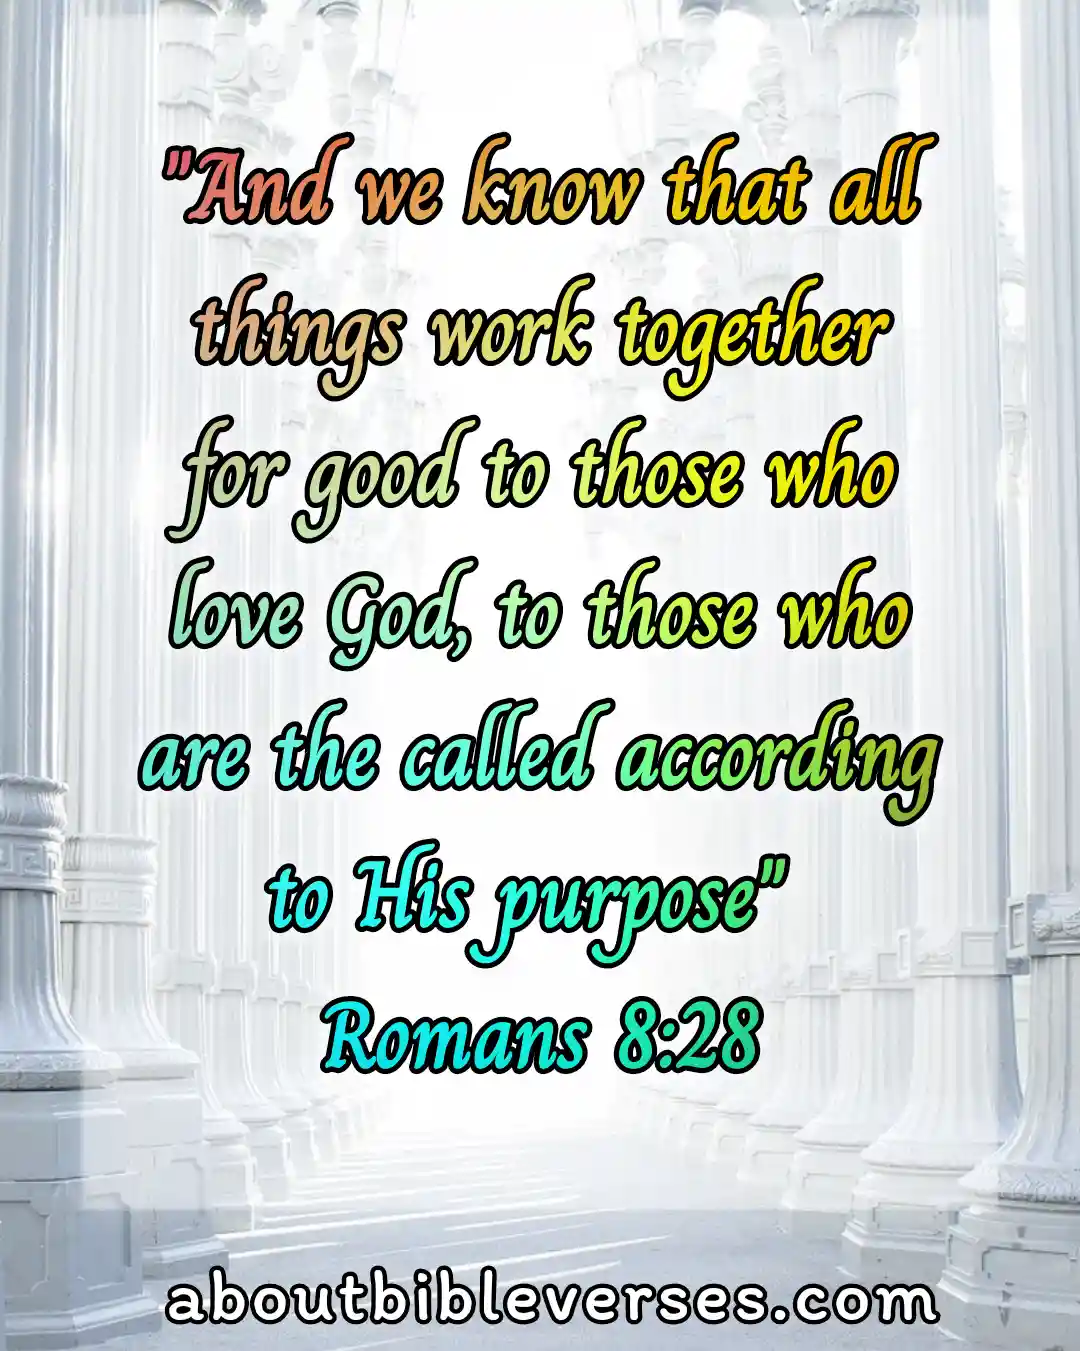 Today Bible verse (Romans 8:28)